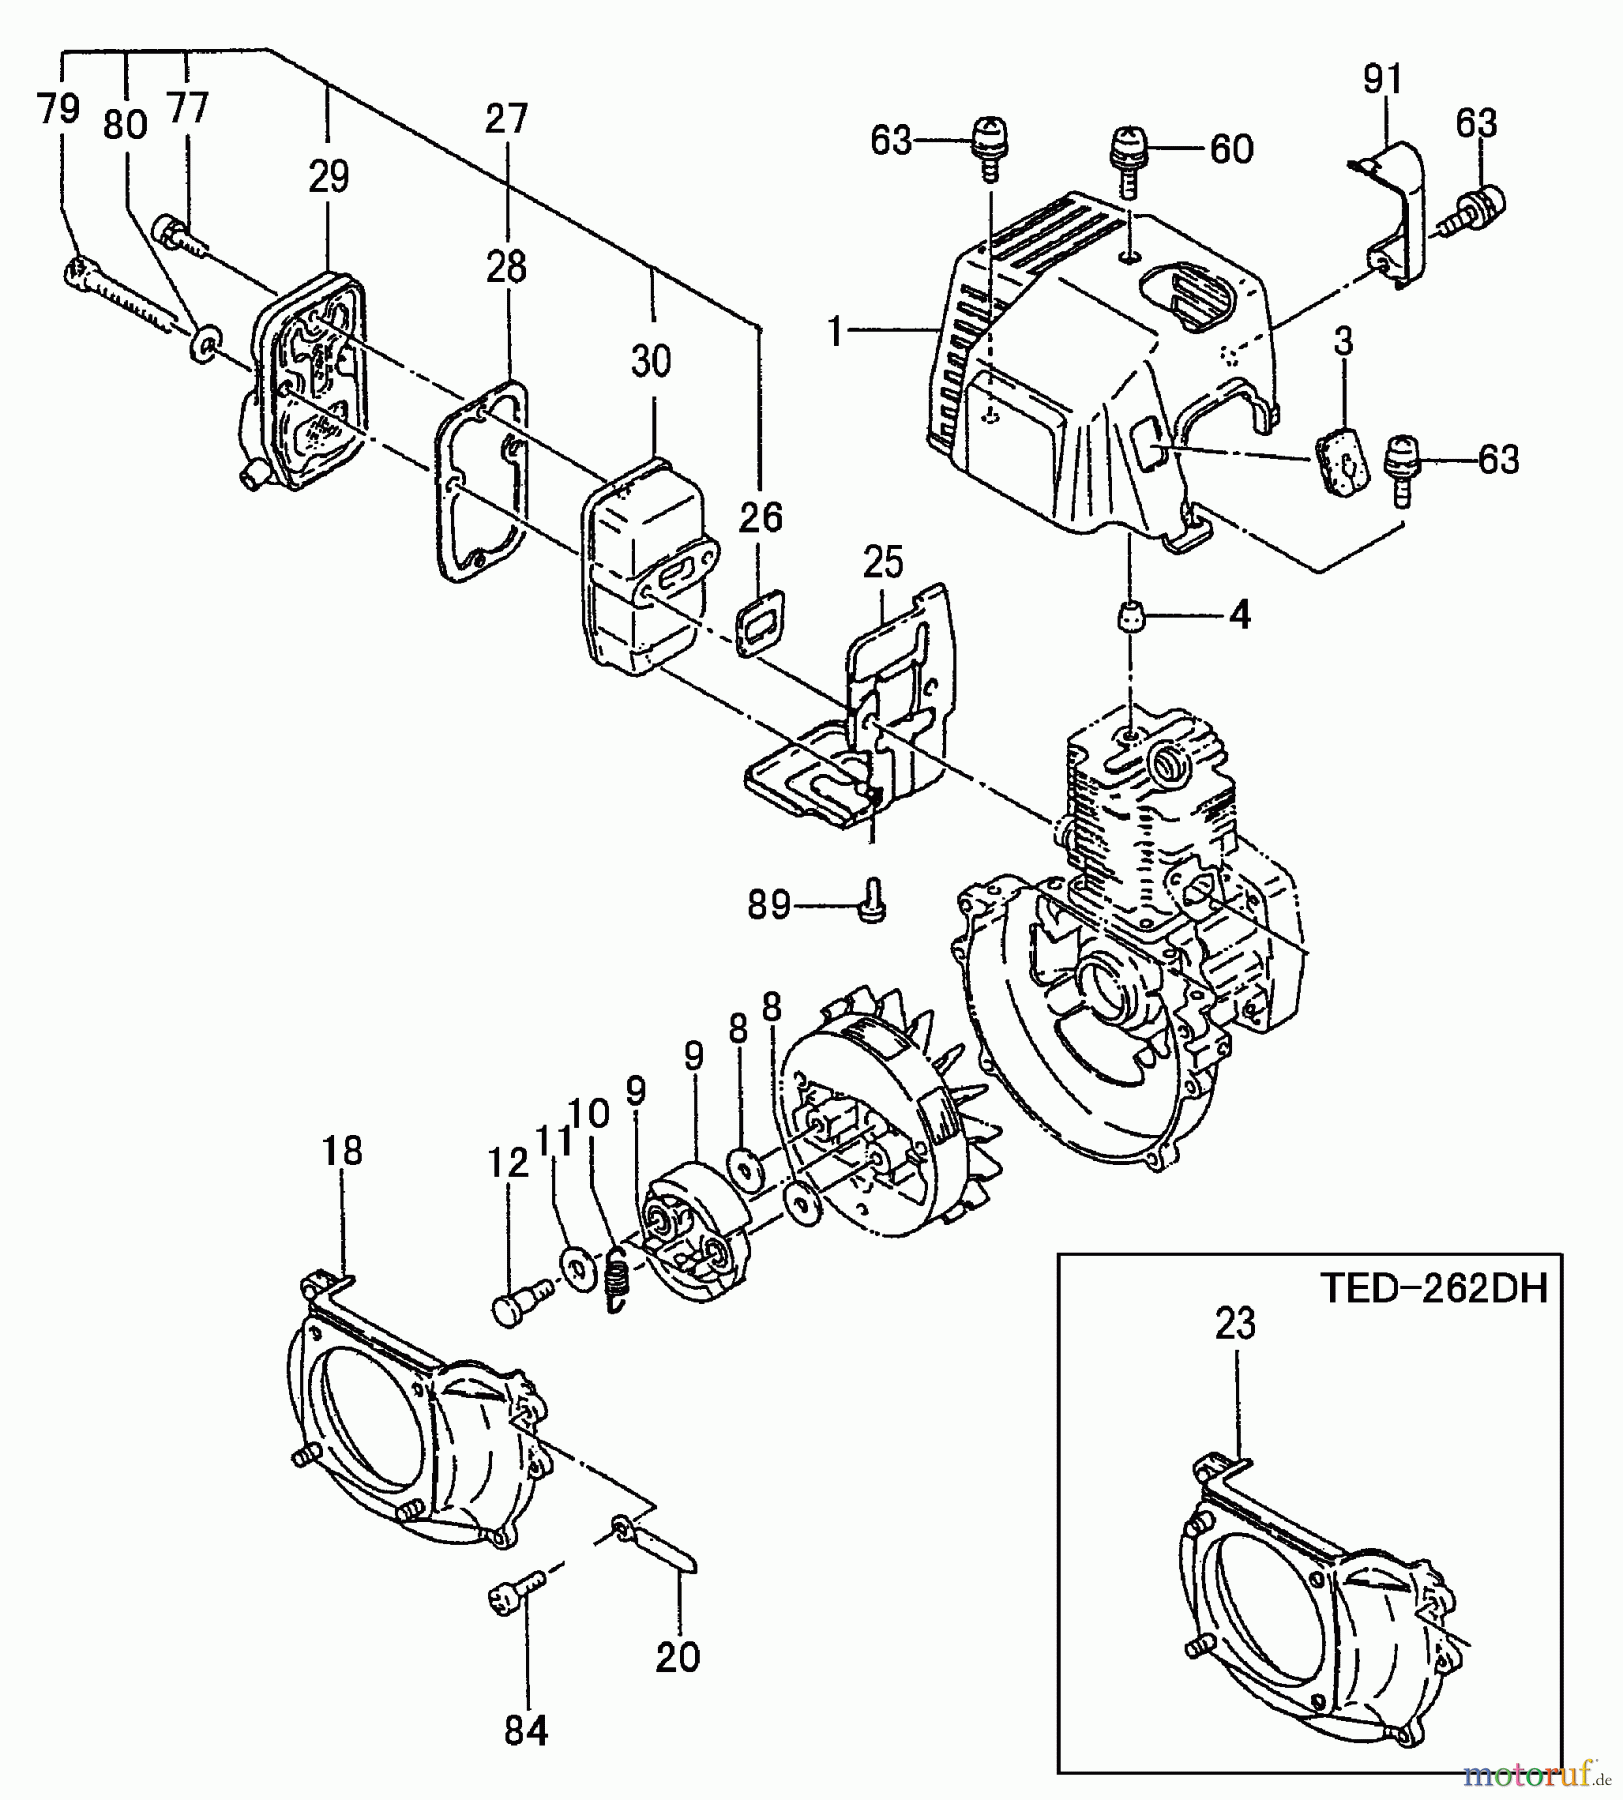  Tanaka Erdbohrer TED-262 - Tanaka Portable Gas Drill Muffler, Clutch & Cover